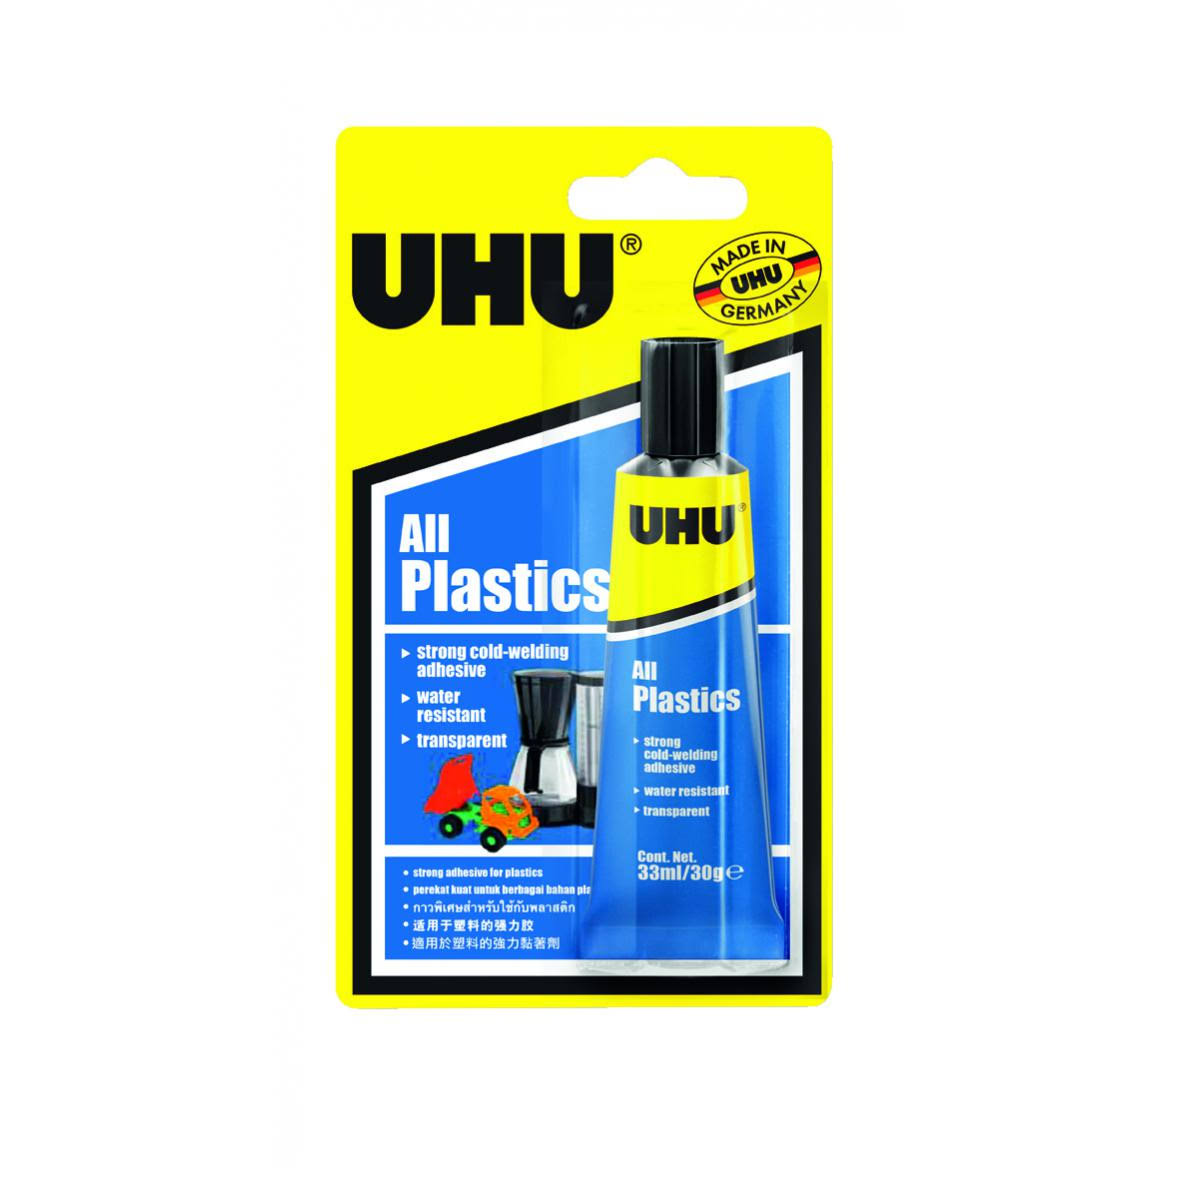 Uhu All Plastic Adhesive Glue - 33ml